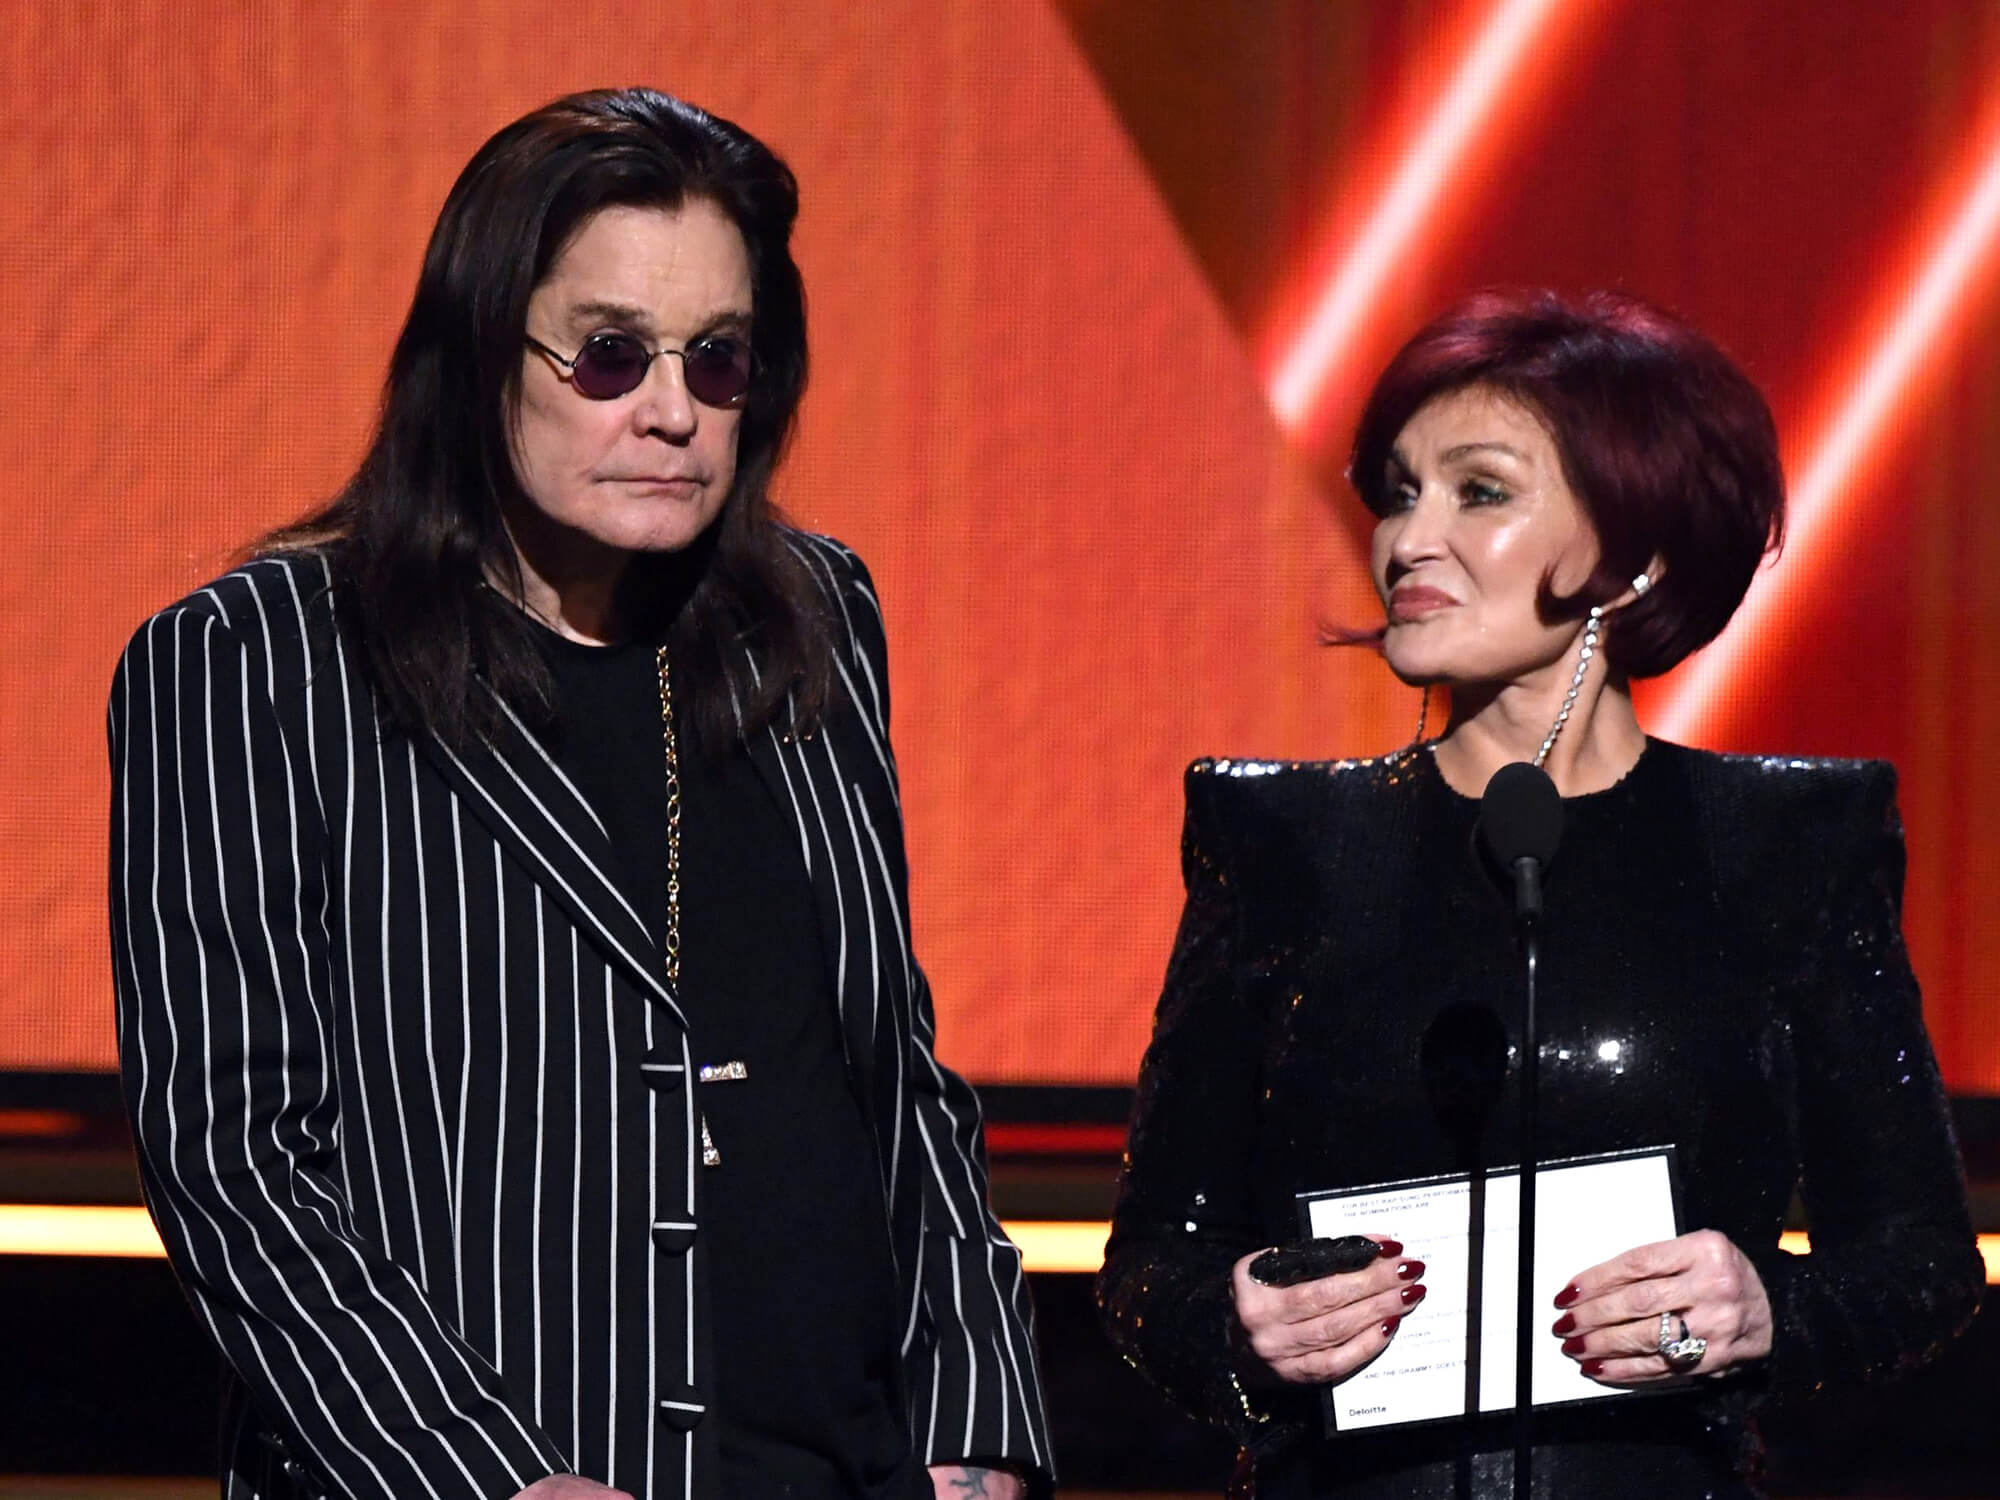 Ozzy Osbourne and Sharon Osbourne speak onstage